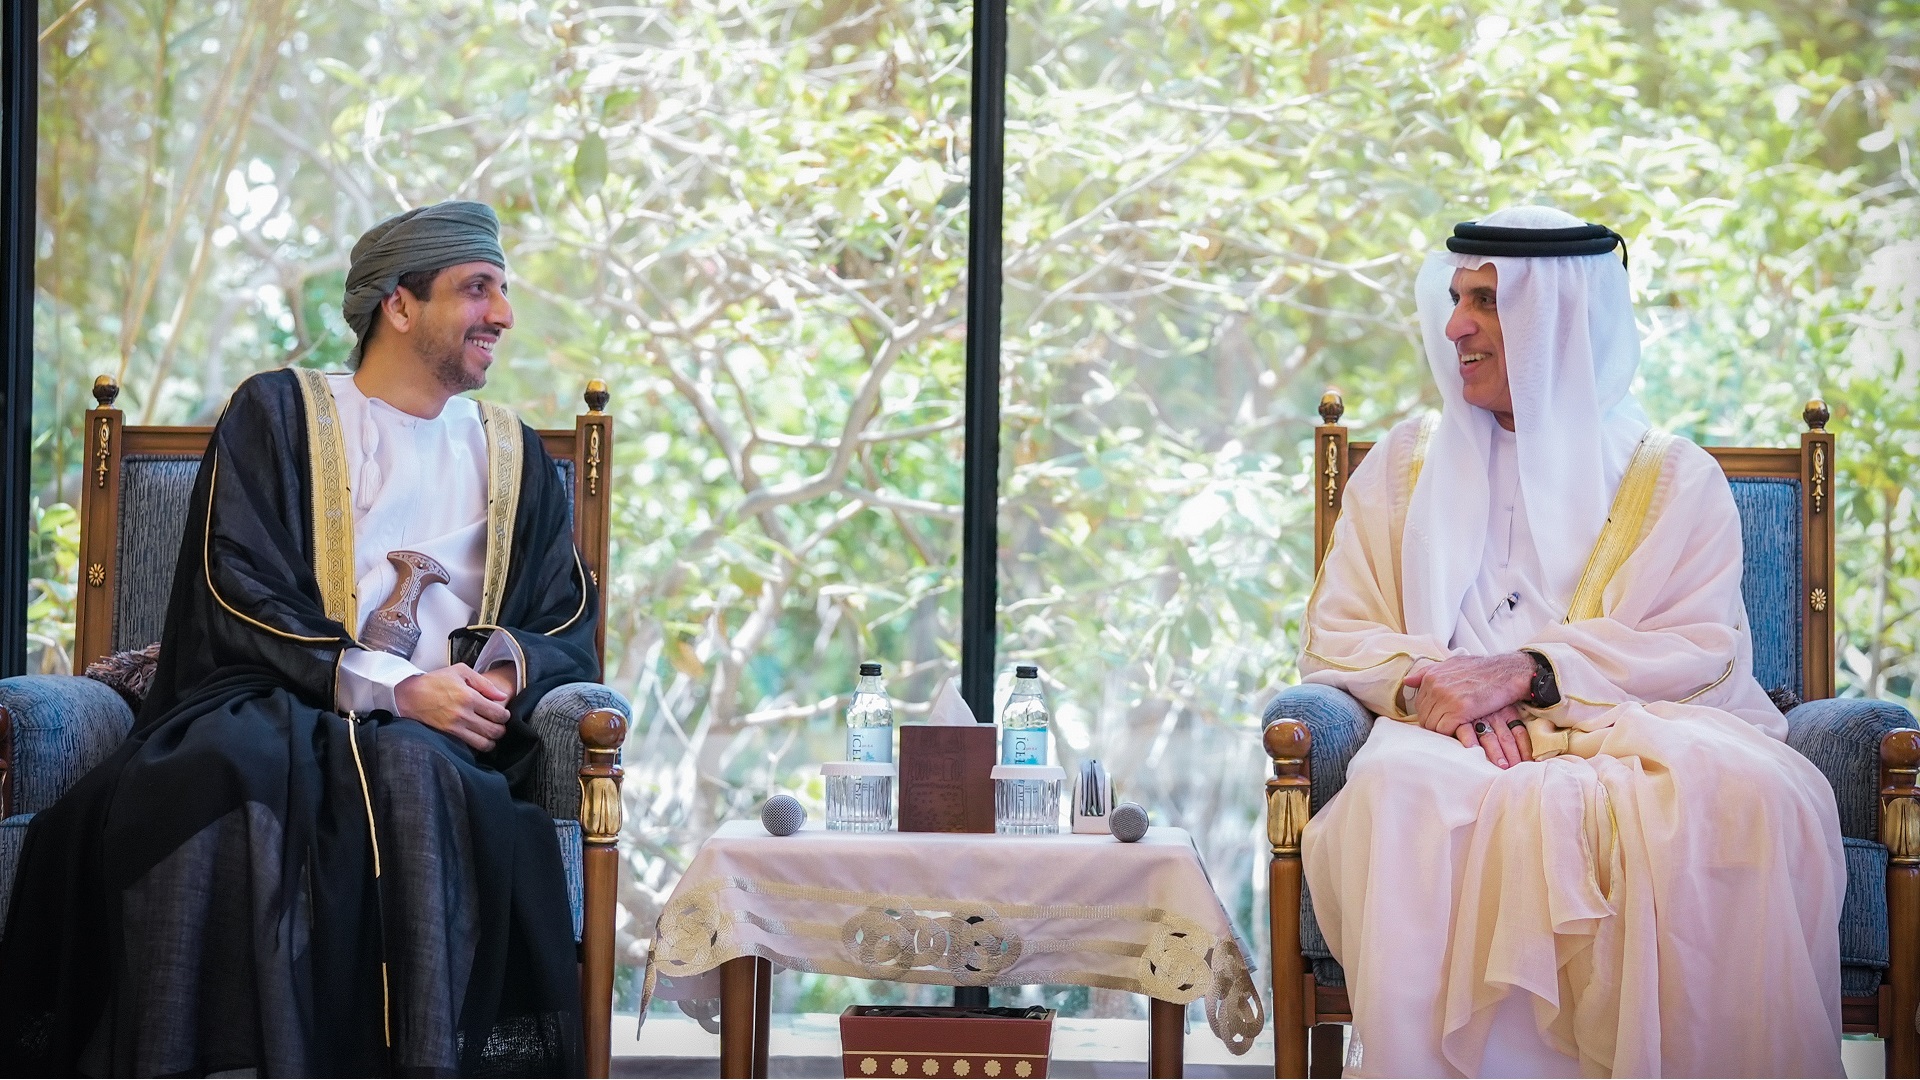 Ras Al Khaimah Ruler attends opening of IWAM 2023